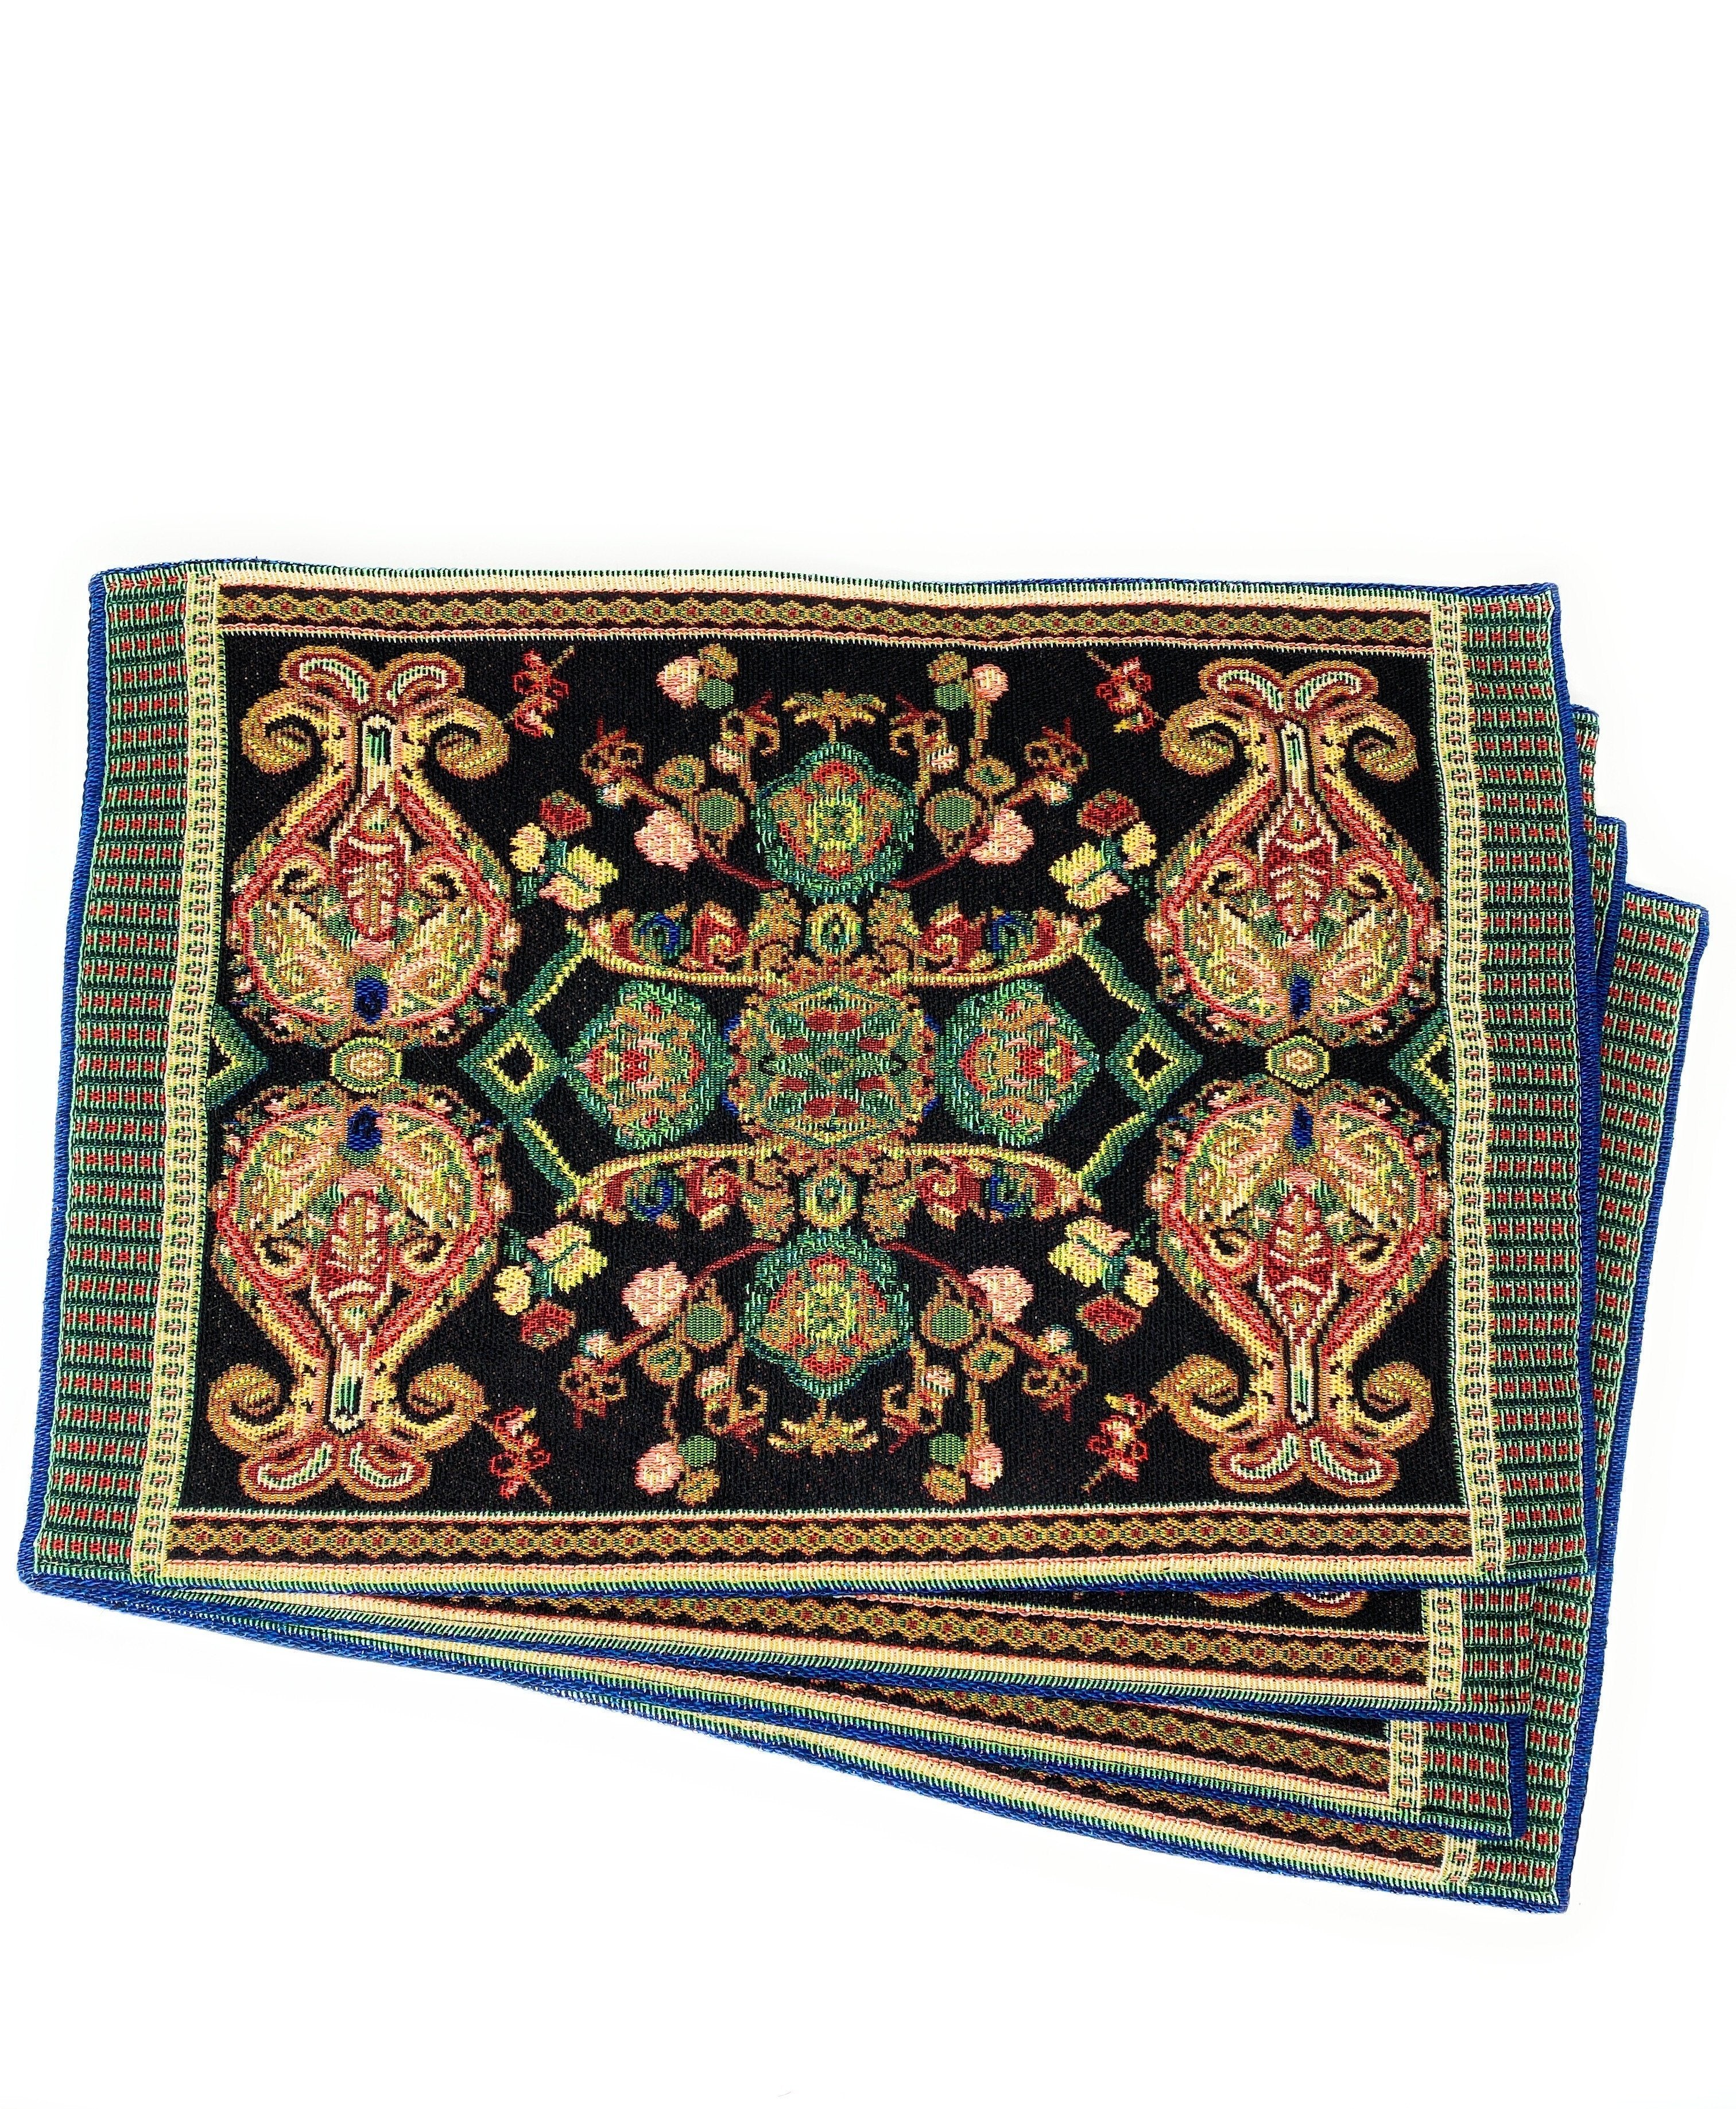 Tache Elegant Black Ornate Paisley Woven Tapestry Placemat Set (18192) - Tache Home Fashion